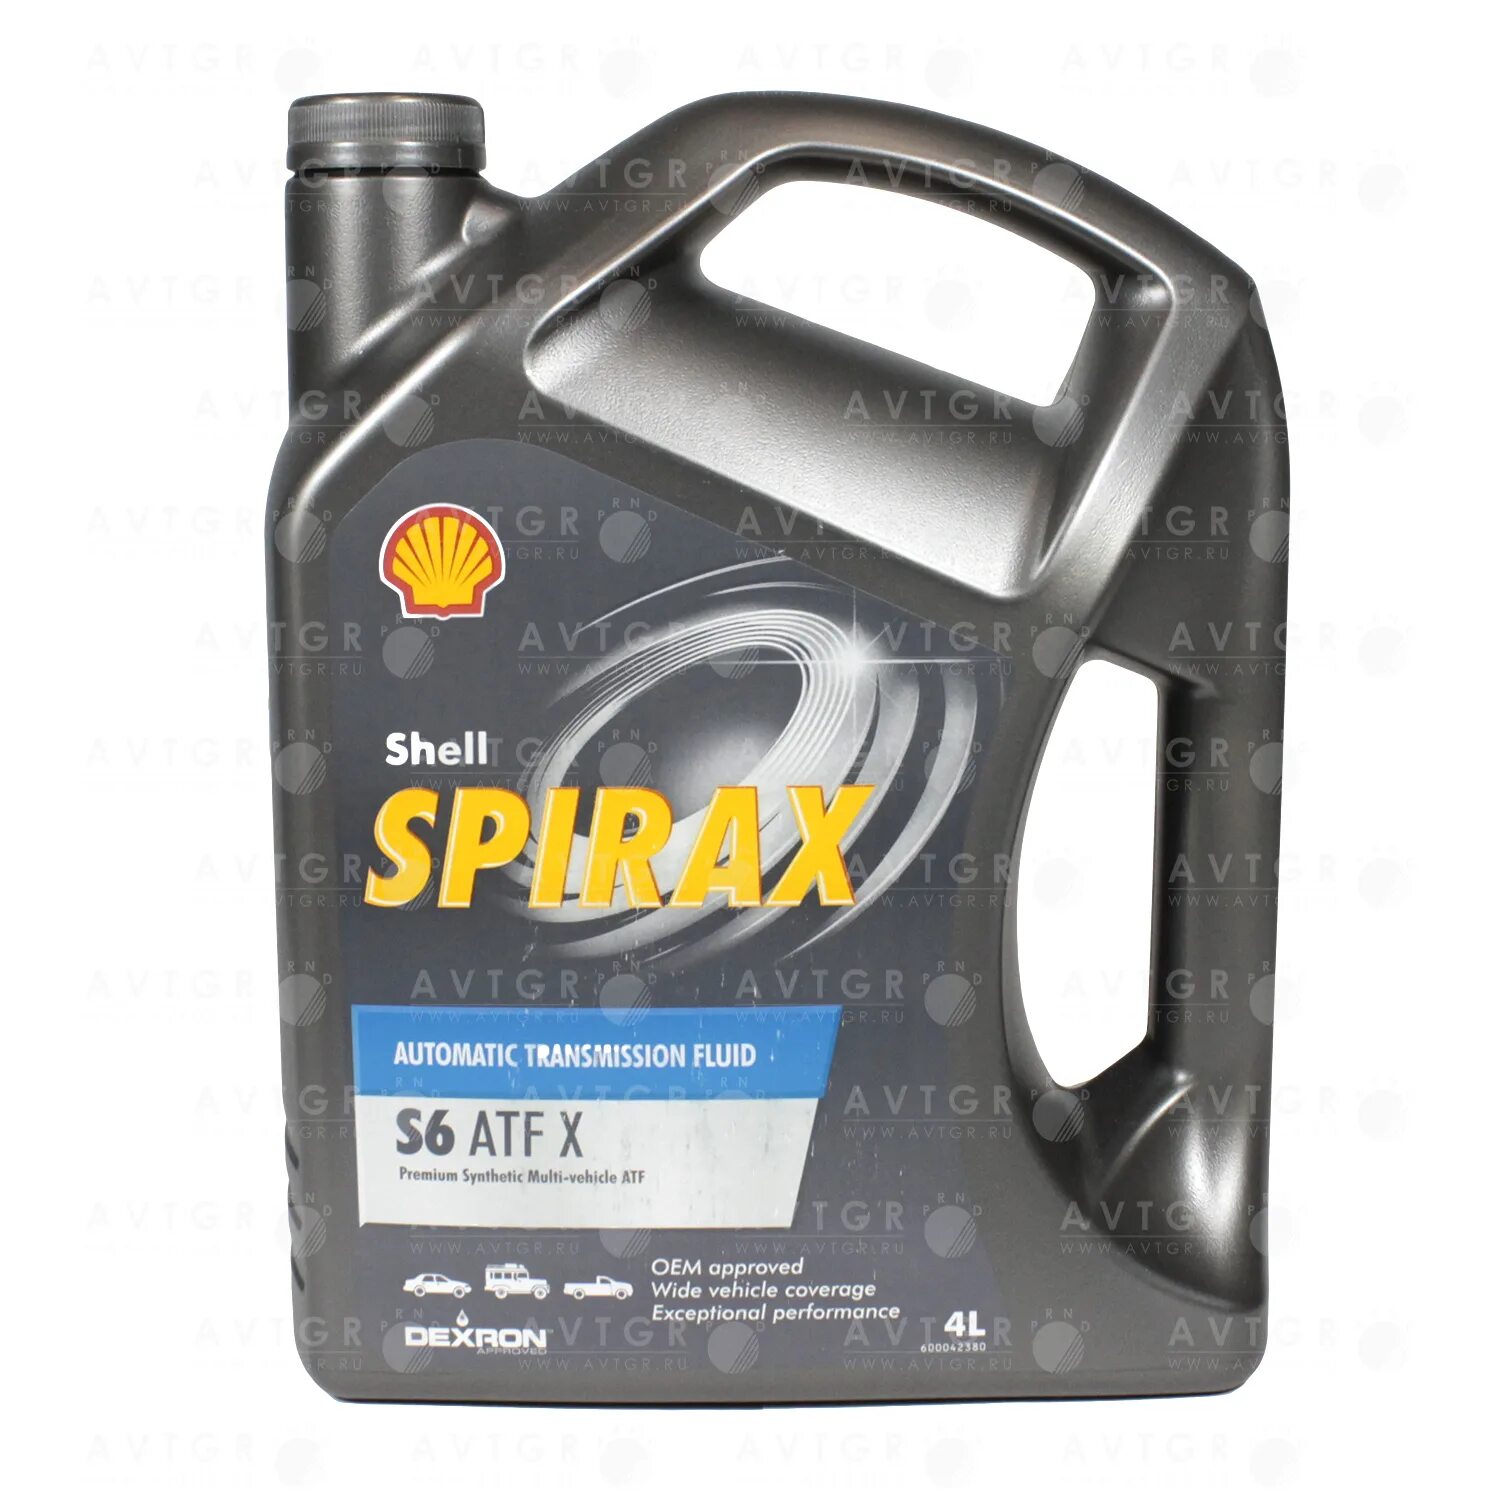 Spirax s6 atf x. 550048808 - Shell Spirax s6 ATF X 4l. 550048808 Shell. Shell Spirax s6 ATF X 4л. Масло Shell Spirax s6 ATF X 4л.